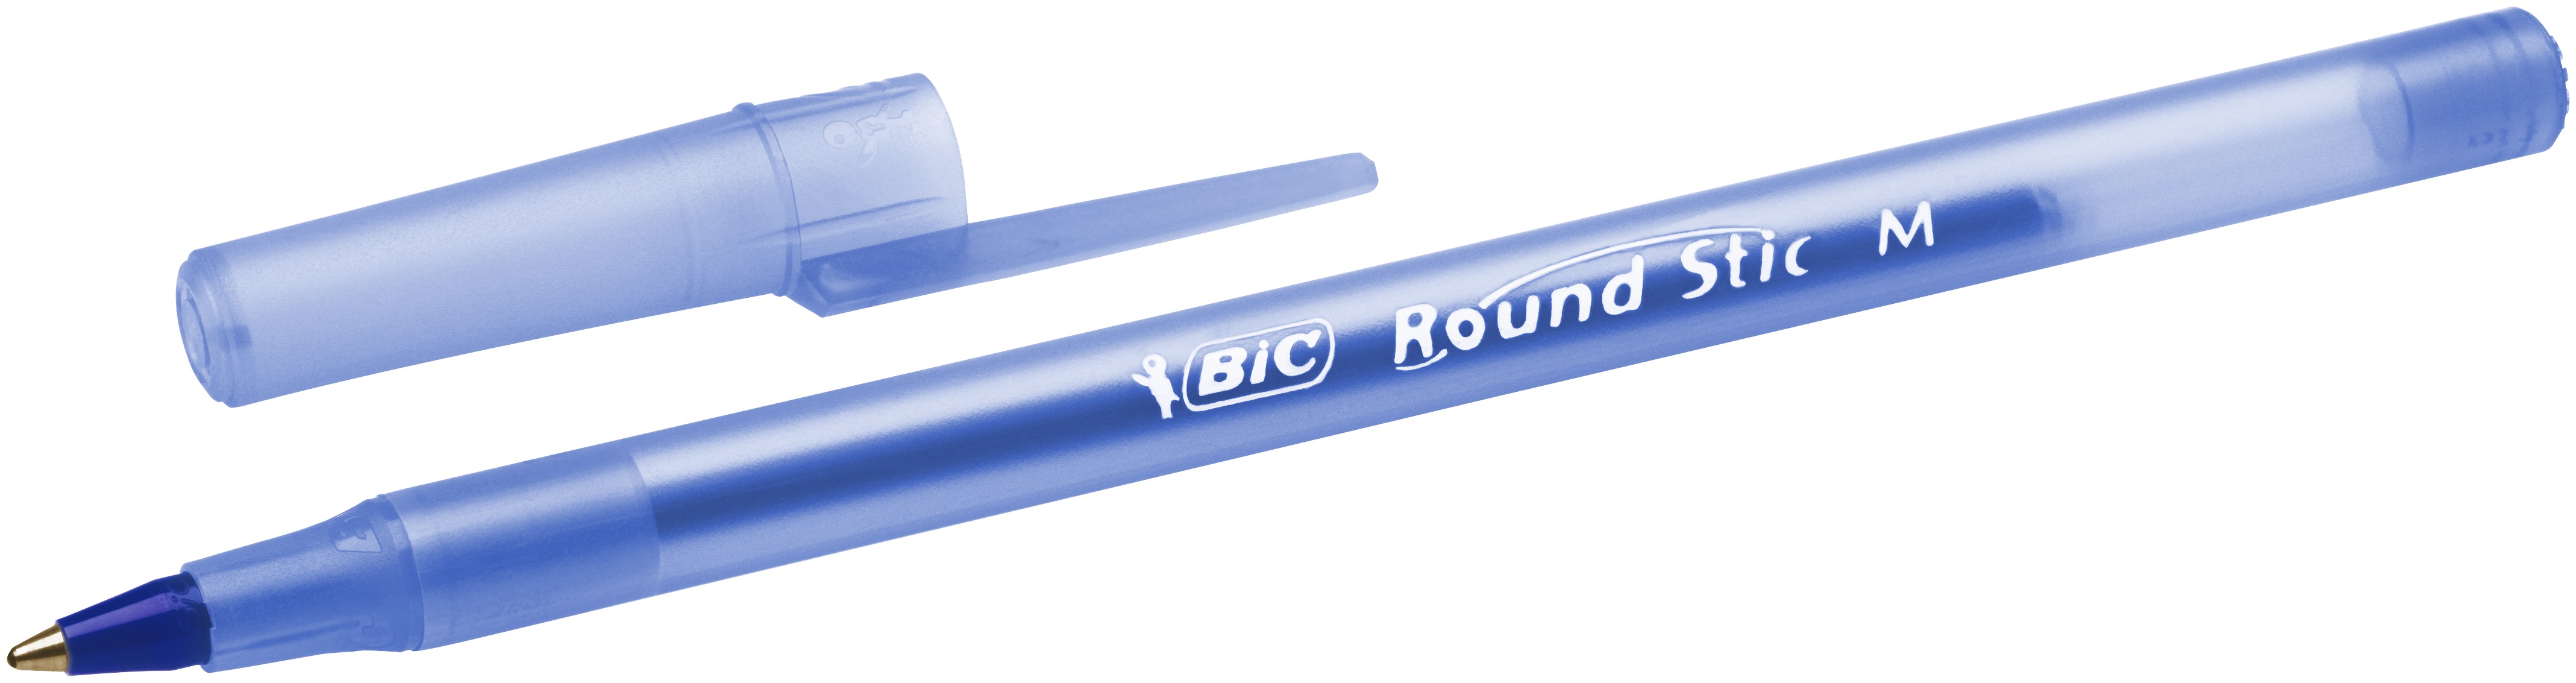 Ручки round stic. Ручка шариковая BIC "Round Stic" синяя, 1,0мм. Ручки BIC Round Stic m. Ручки шариковые BIC Round Stic Classic. Ручка шариковая BIC раунд стик синяя, 921403,0,32 мм.